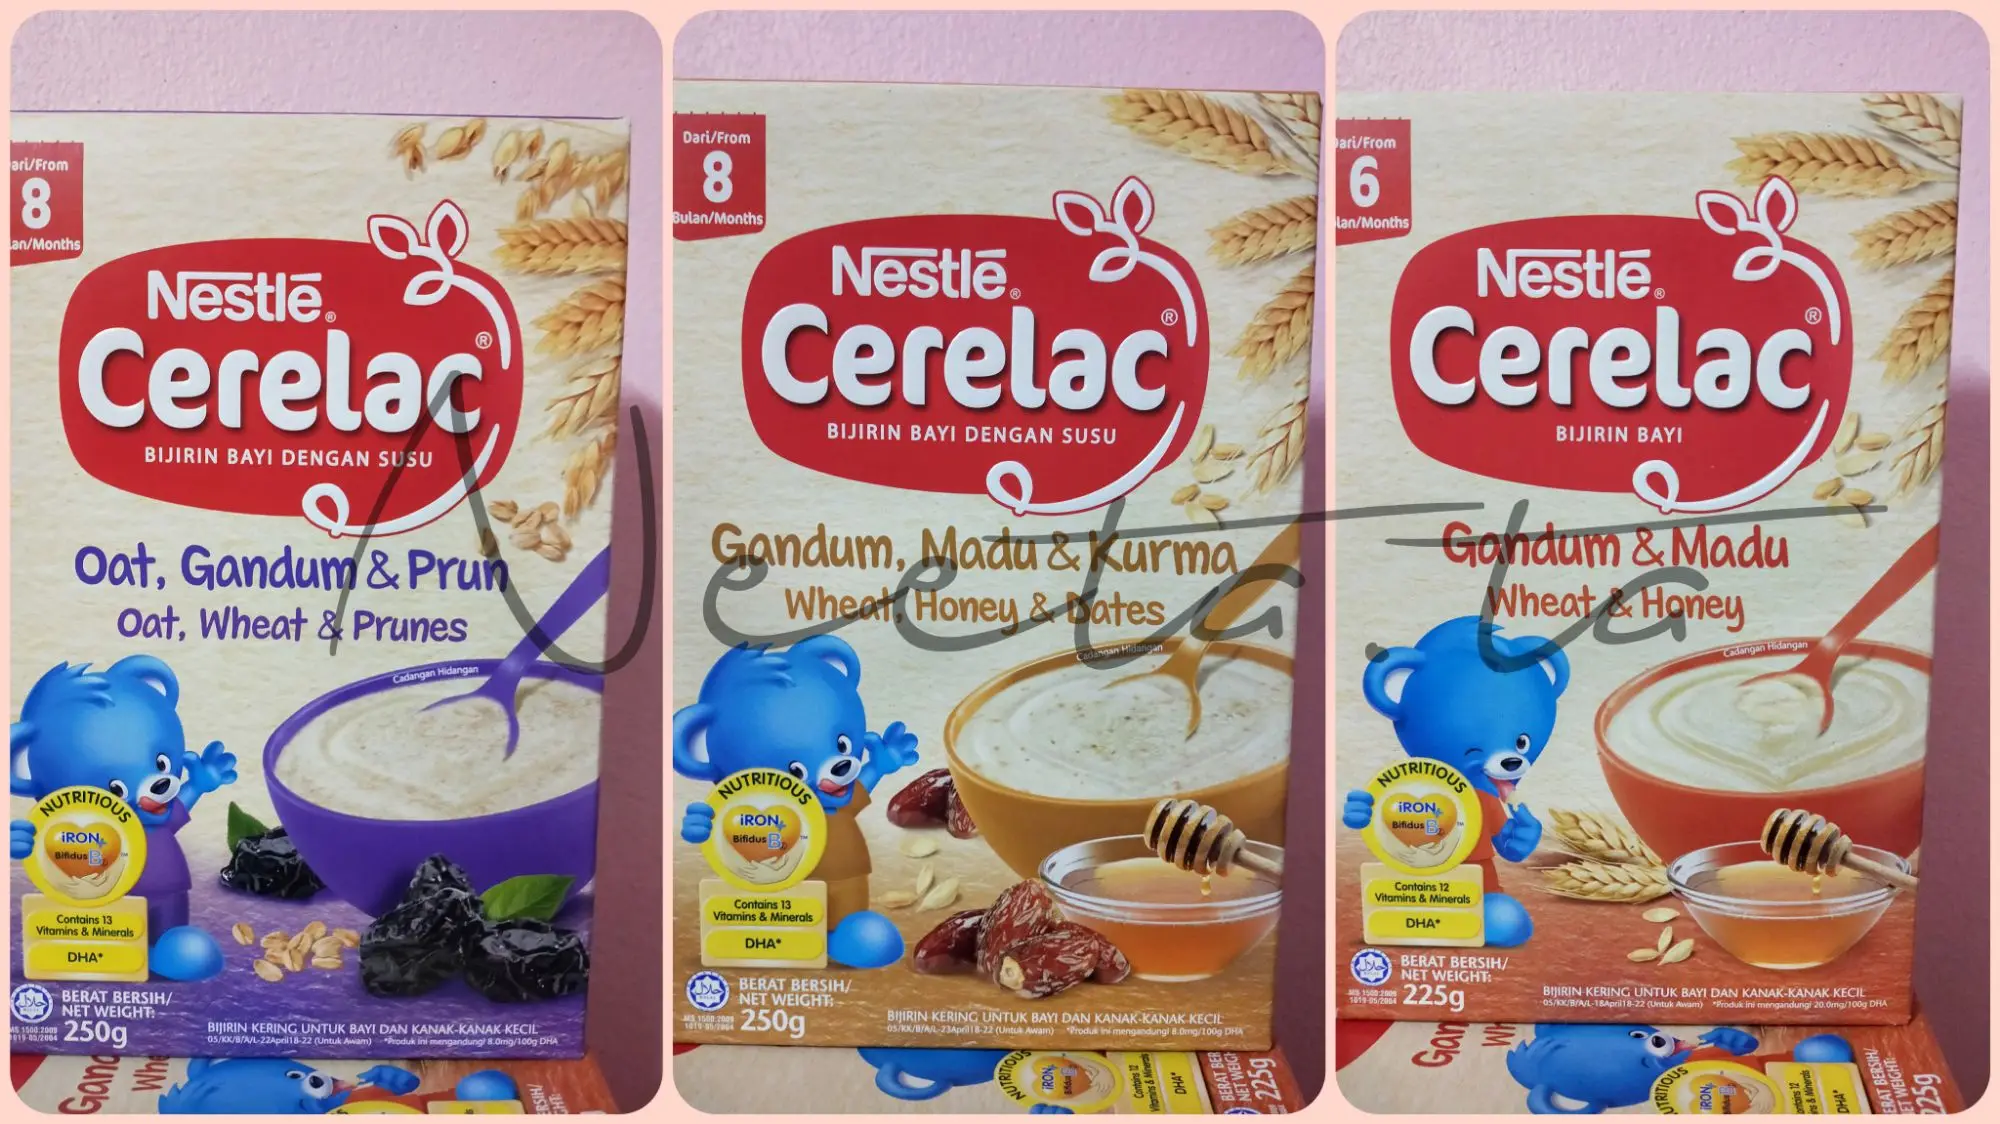 Nestle Cerelac ซีรีแล็ค อาหารเสริม สำหรับเด็ก 6 เดือนขึ้นไป ขนาด 250 กรัม